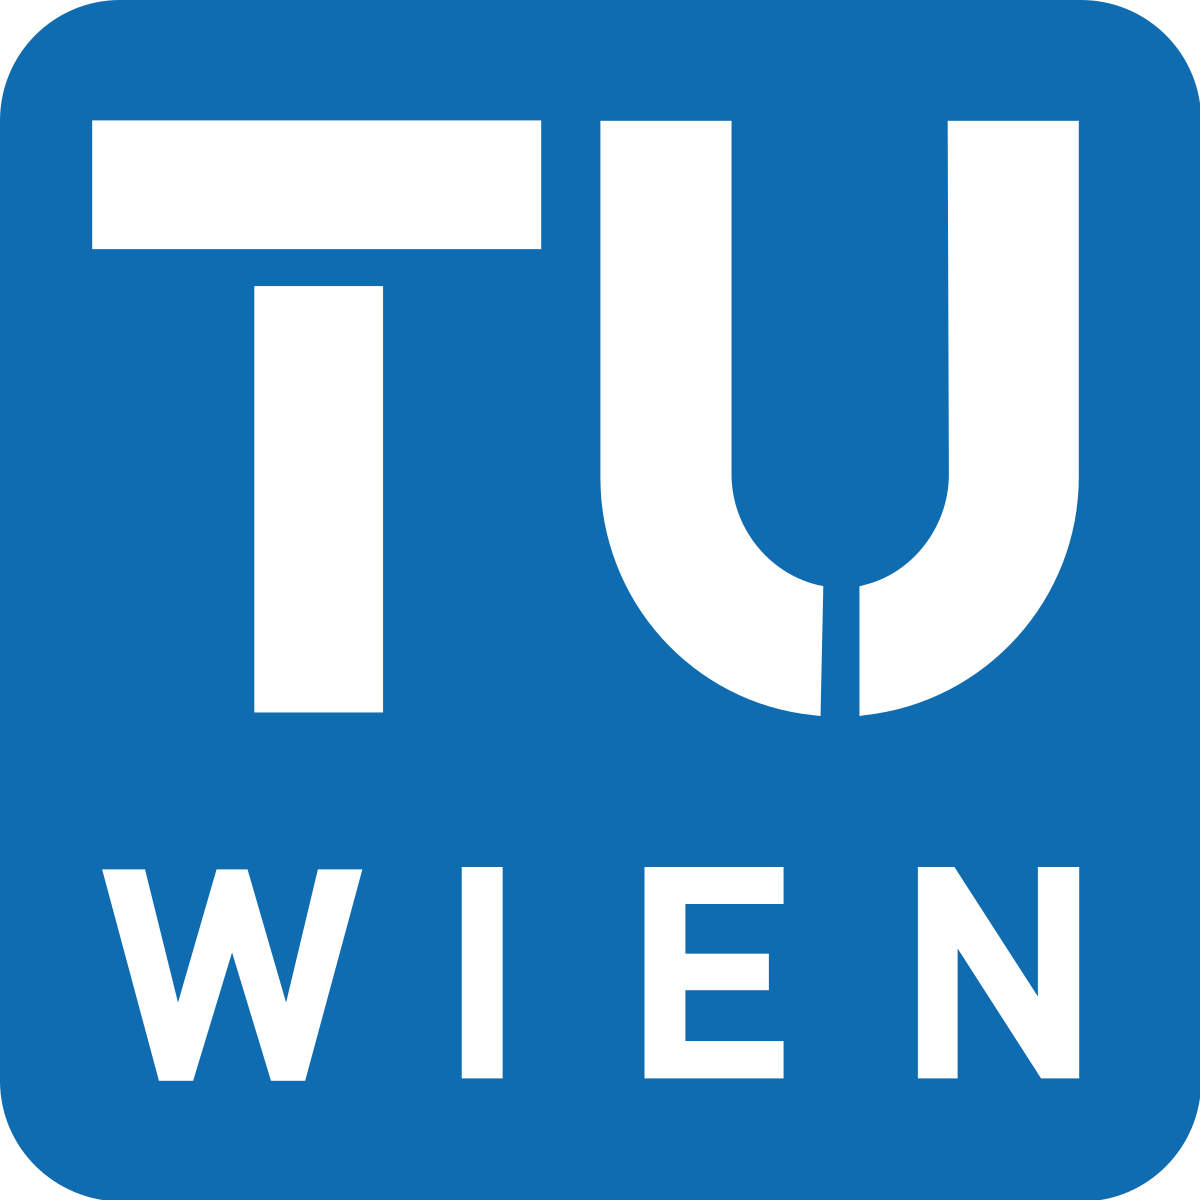 TU Wien - Vienna University of Technology